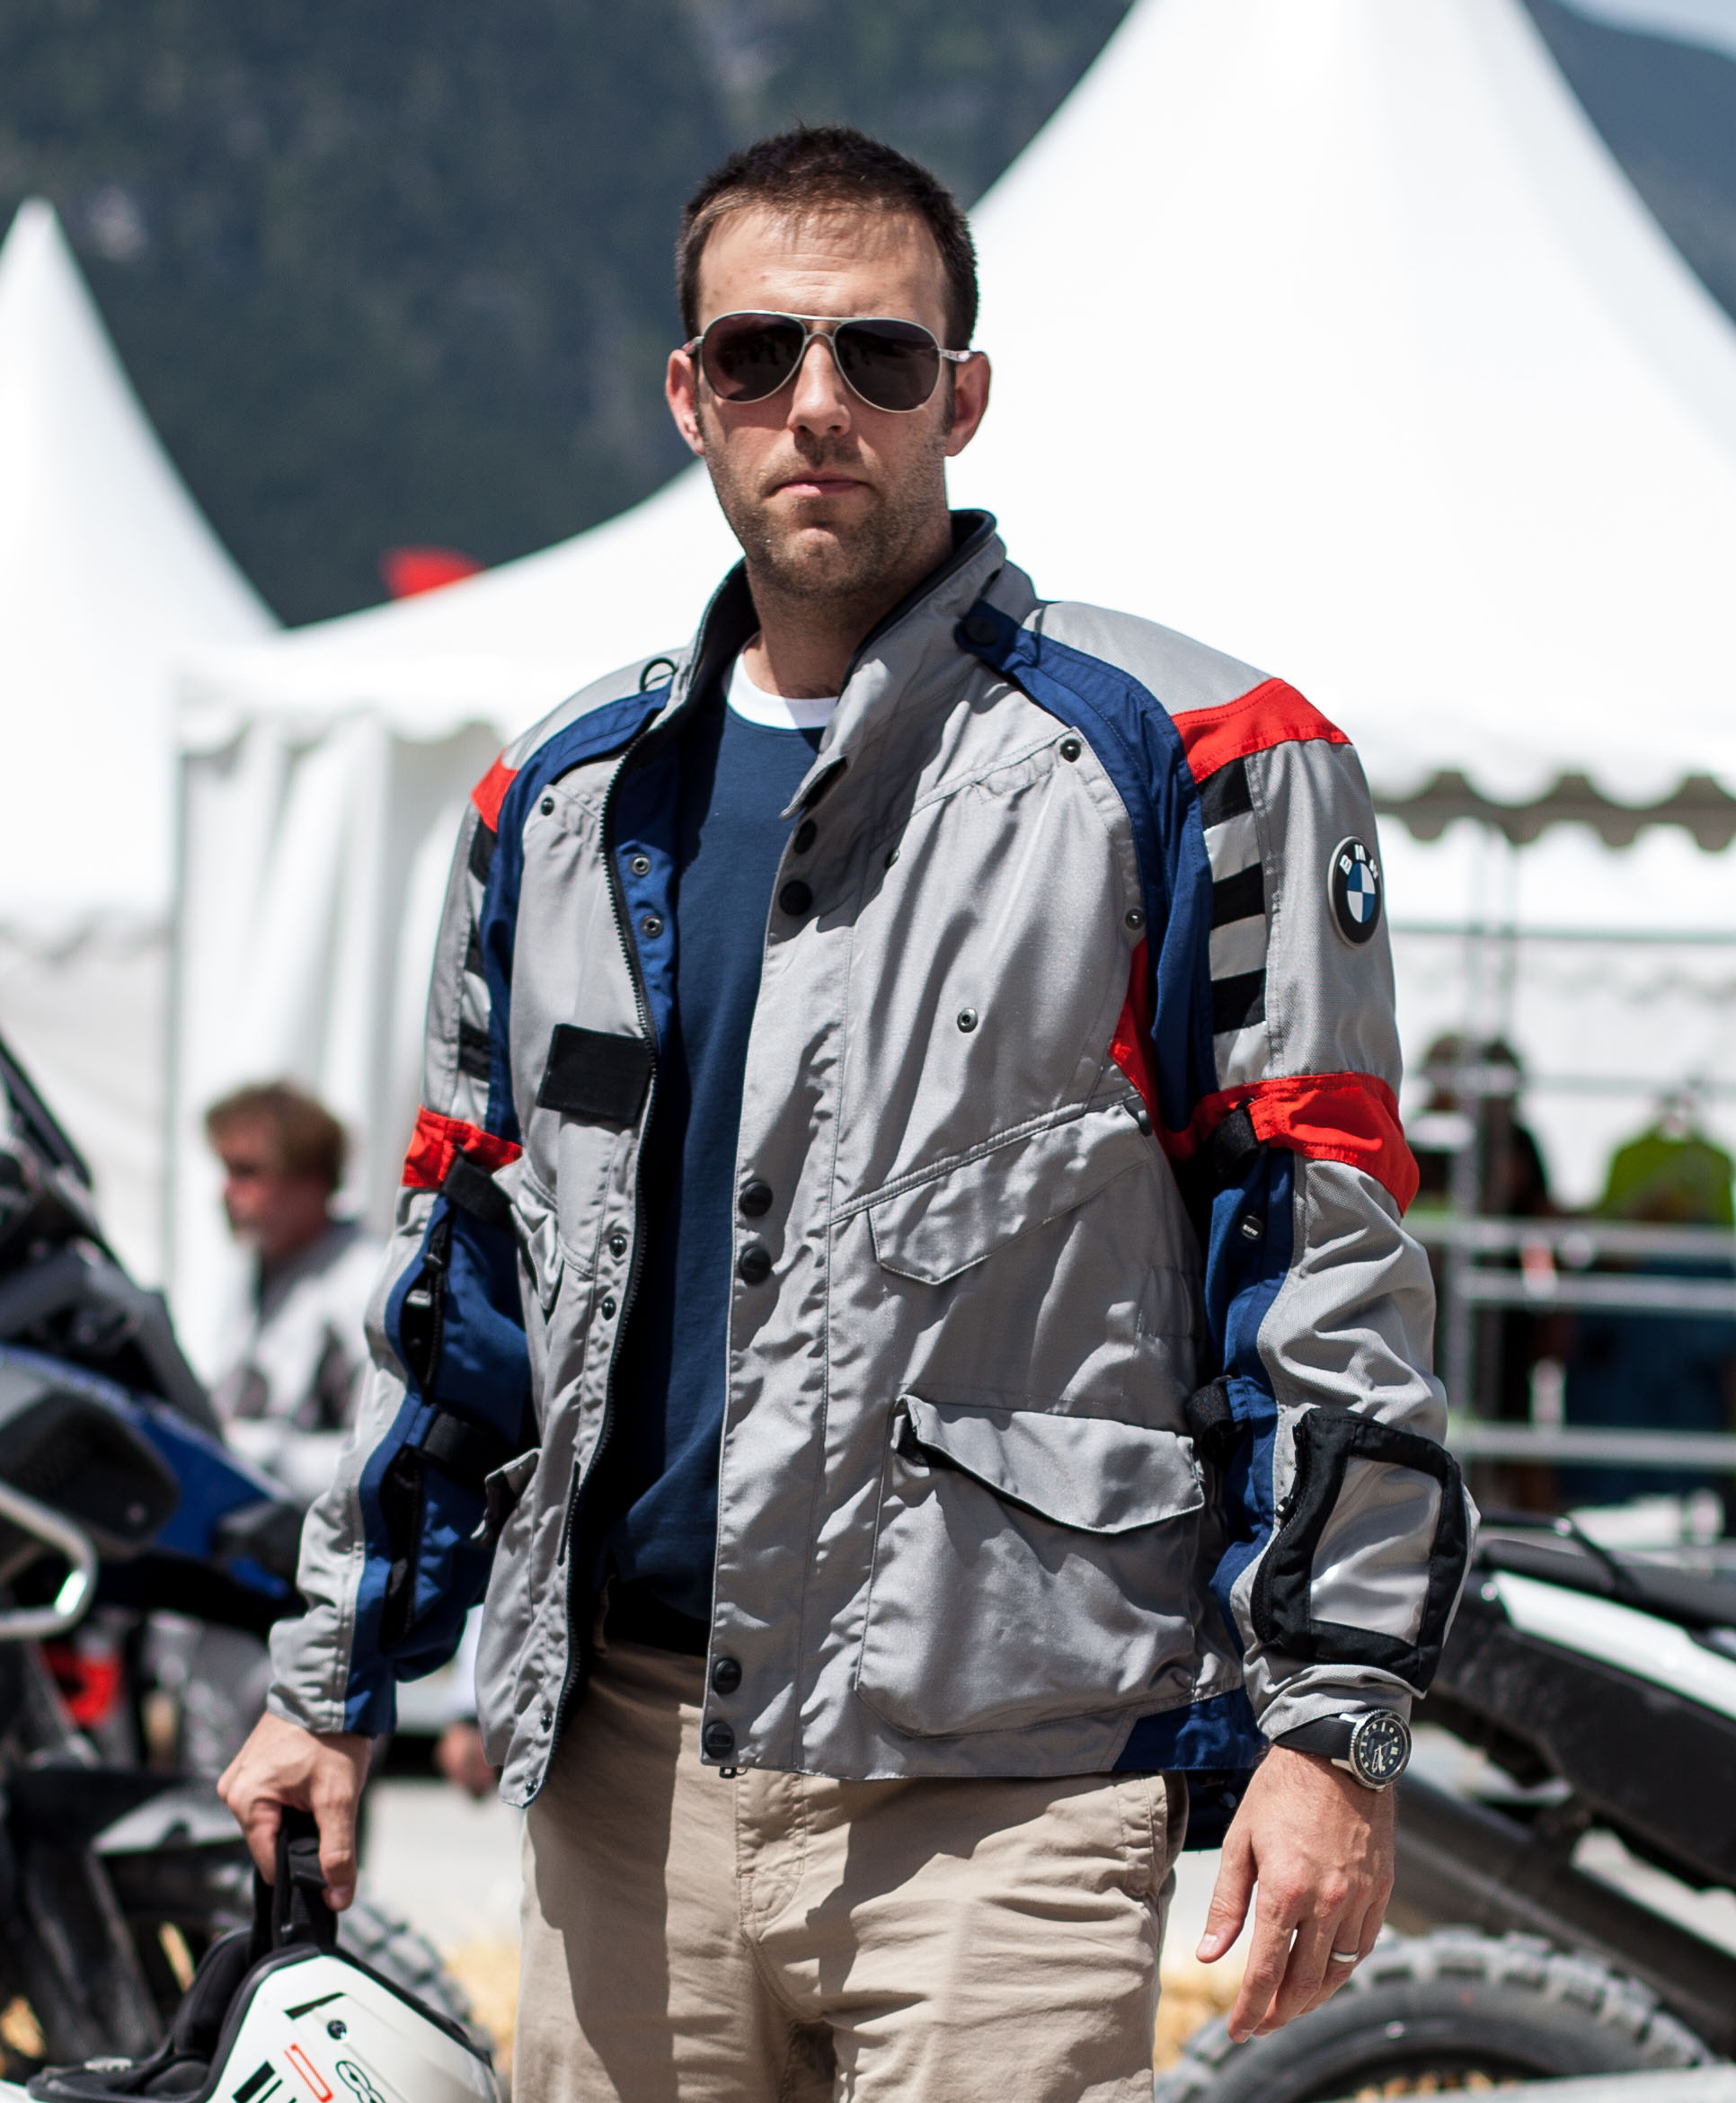 Ryan Pyle at the BMW Motorrad event in Garmisch, Germany in July 2014.